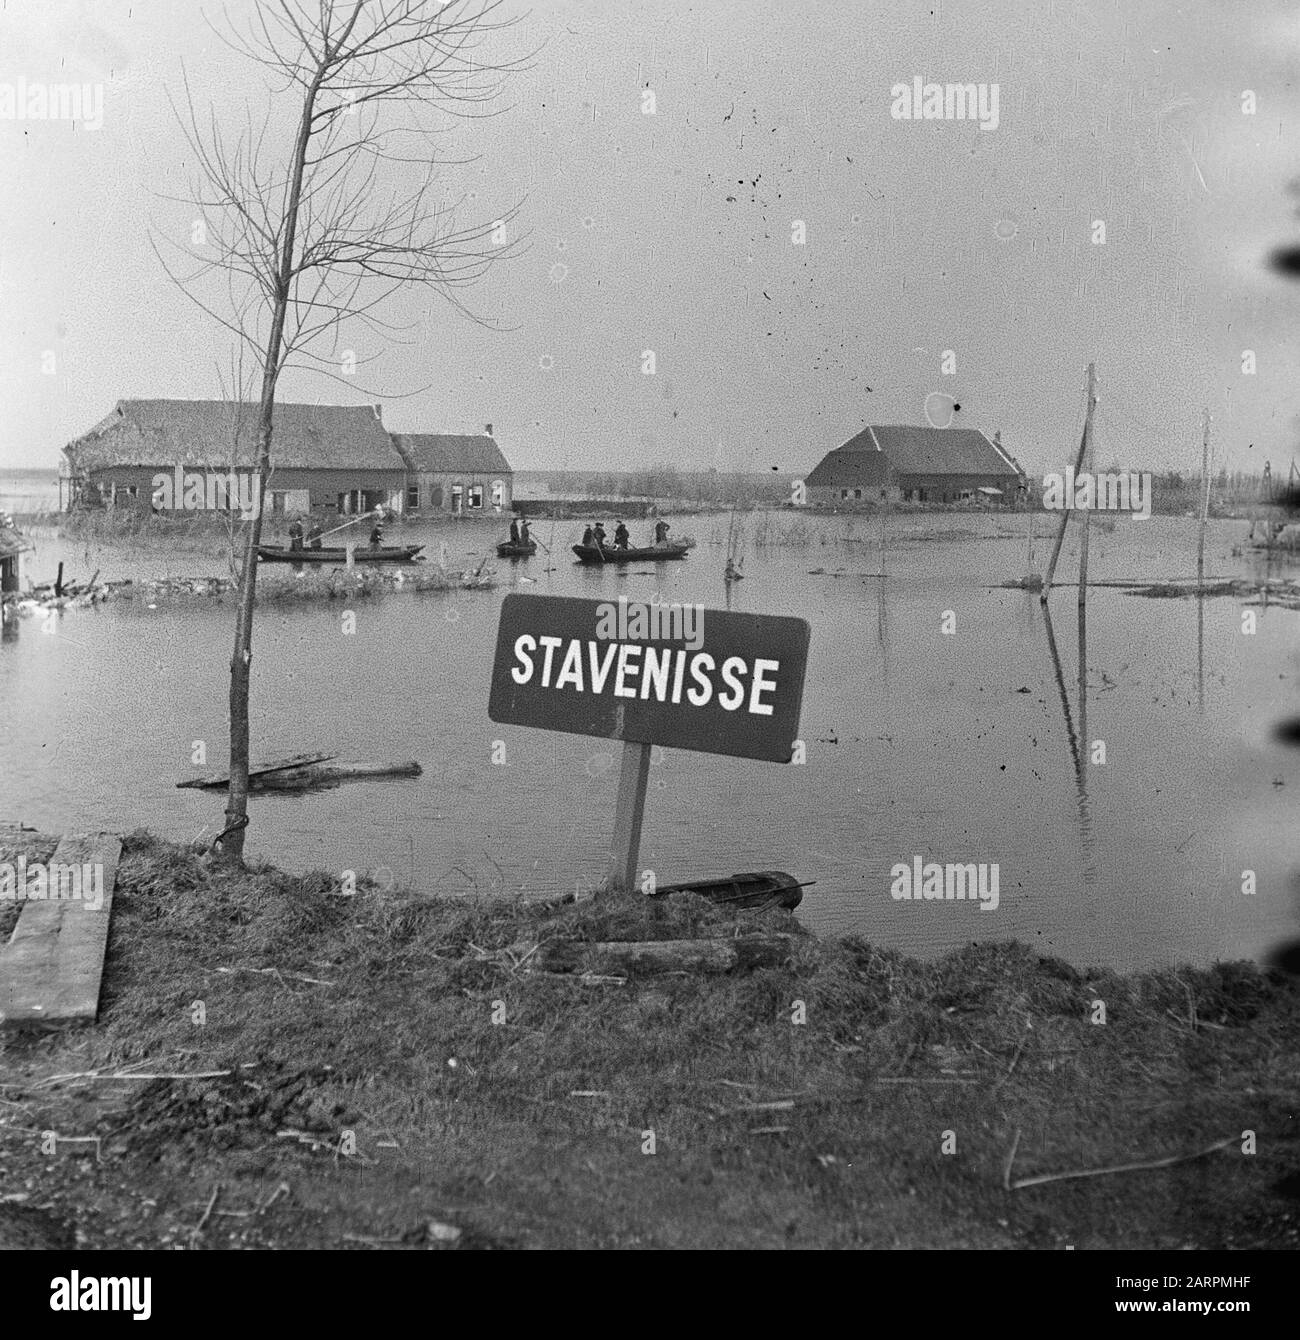 Watersnood 1953 [Flood plates]  Stavenisse Date: 17 February 1953 Location: Stavenisse, Zeeland Stock Photo